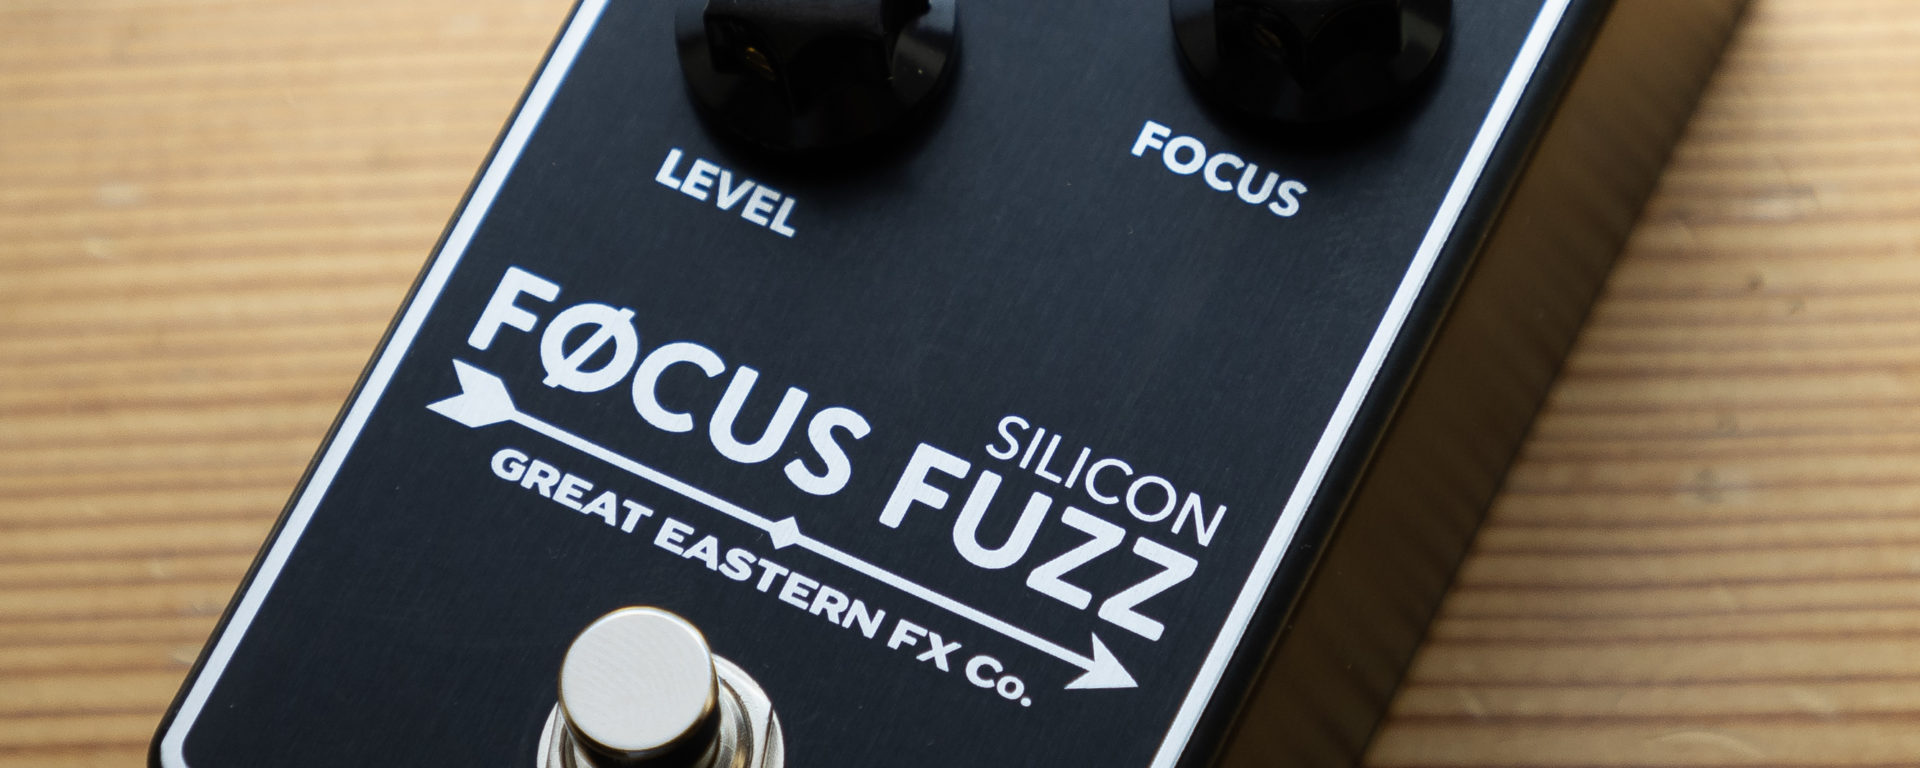 Great Eastern FX Co. - Focus Fuzz Silicon